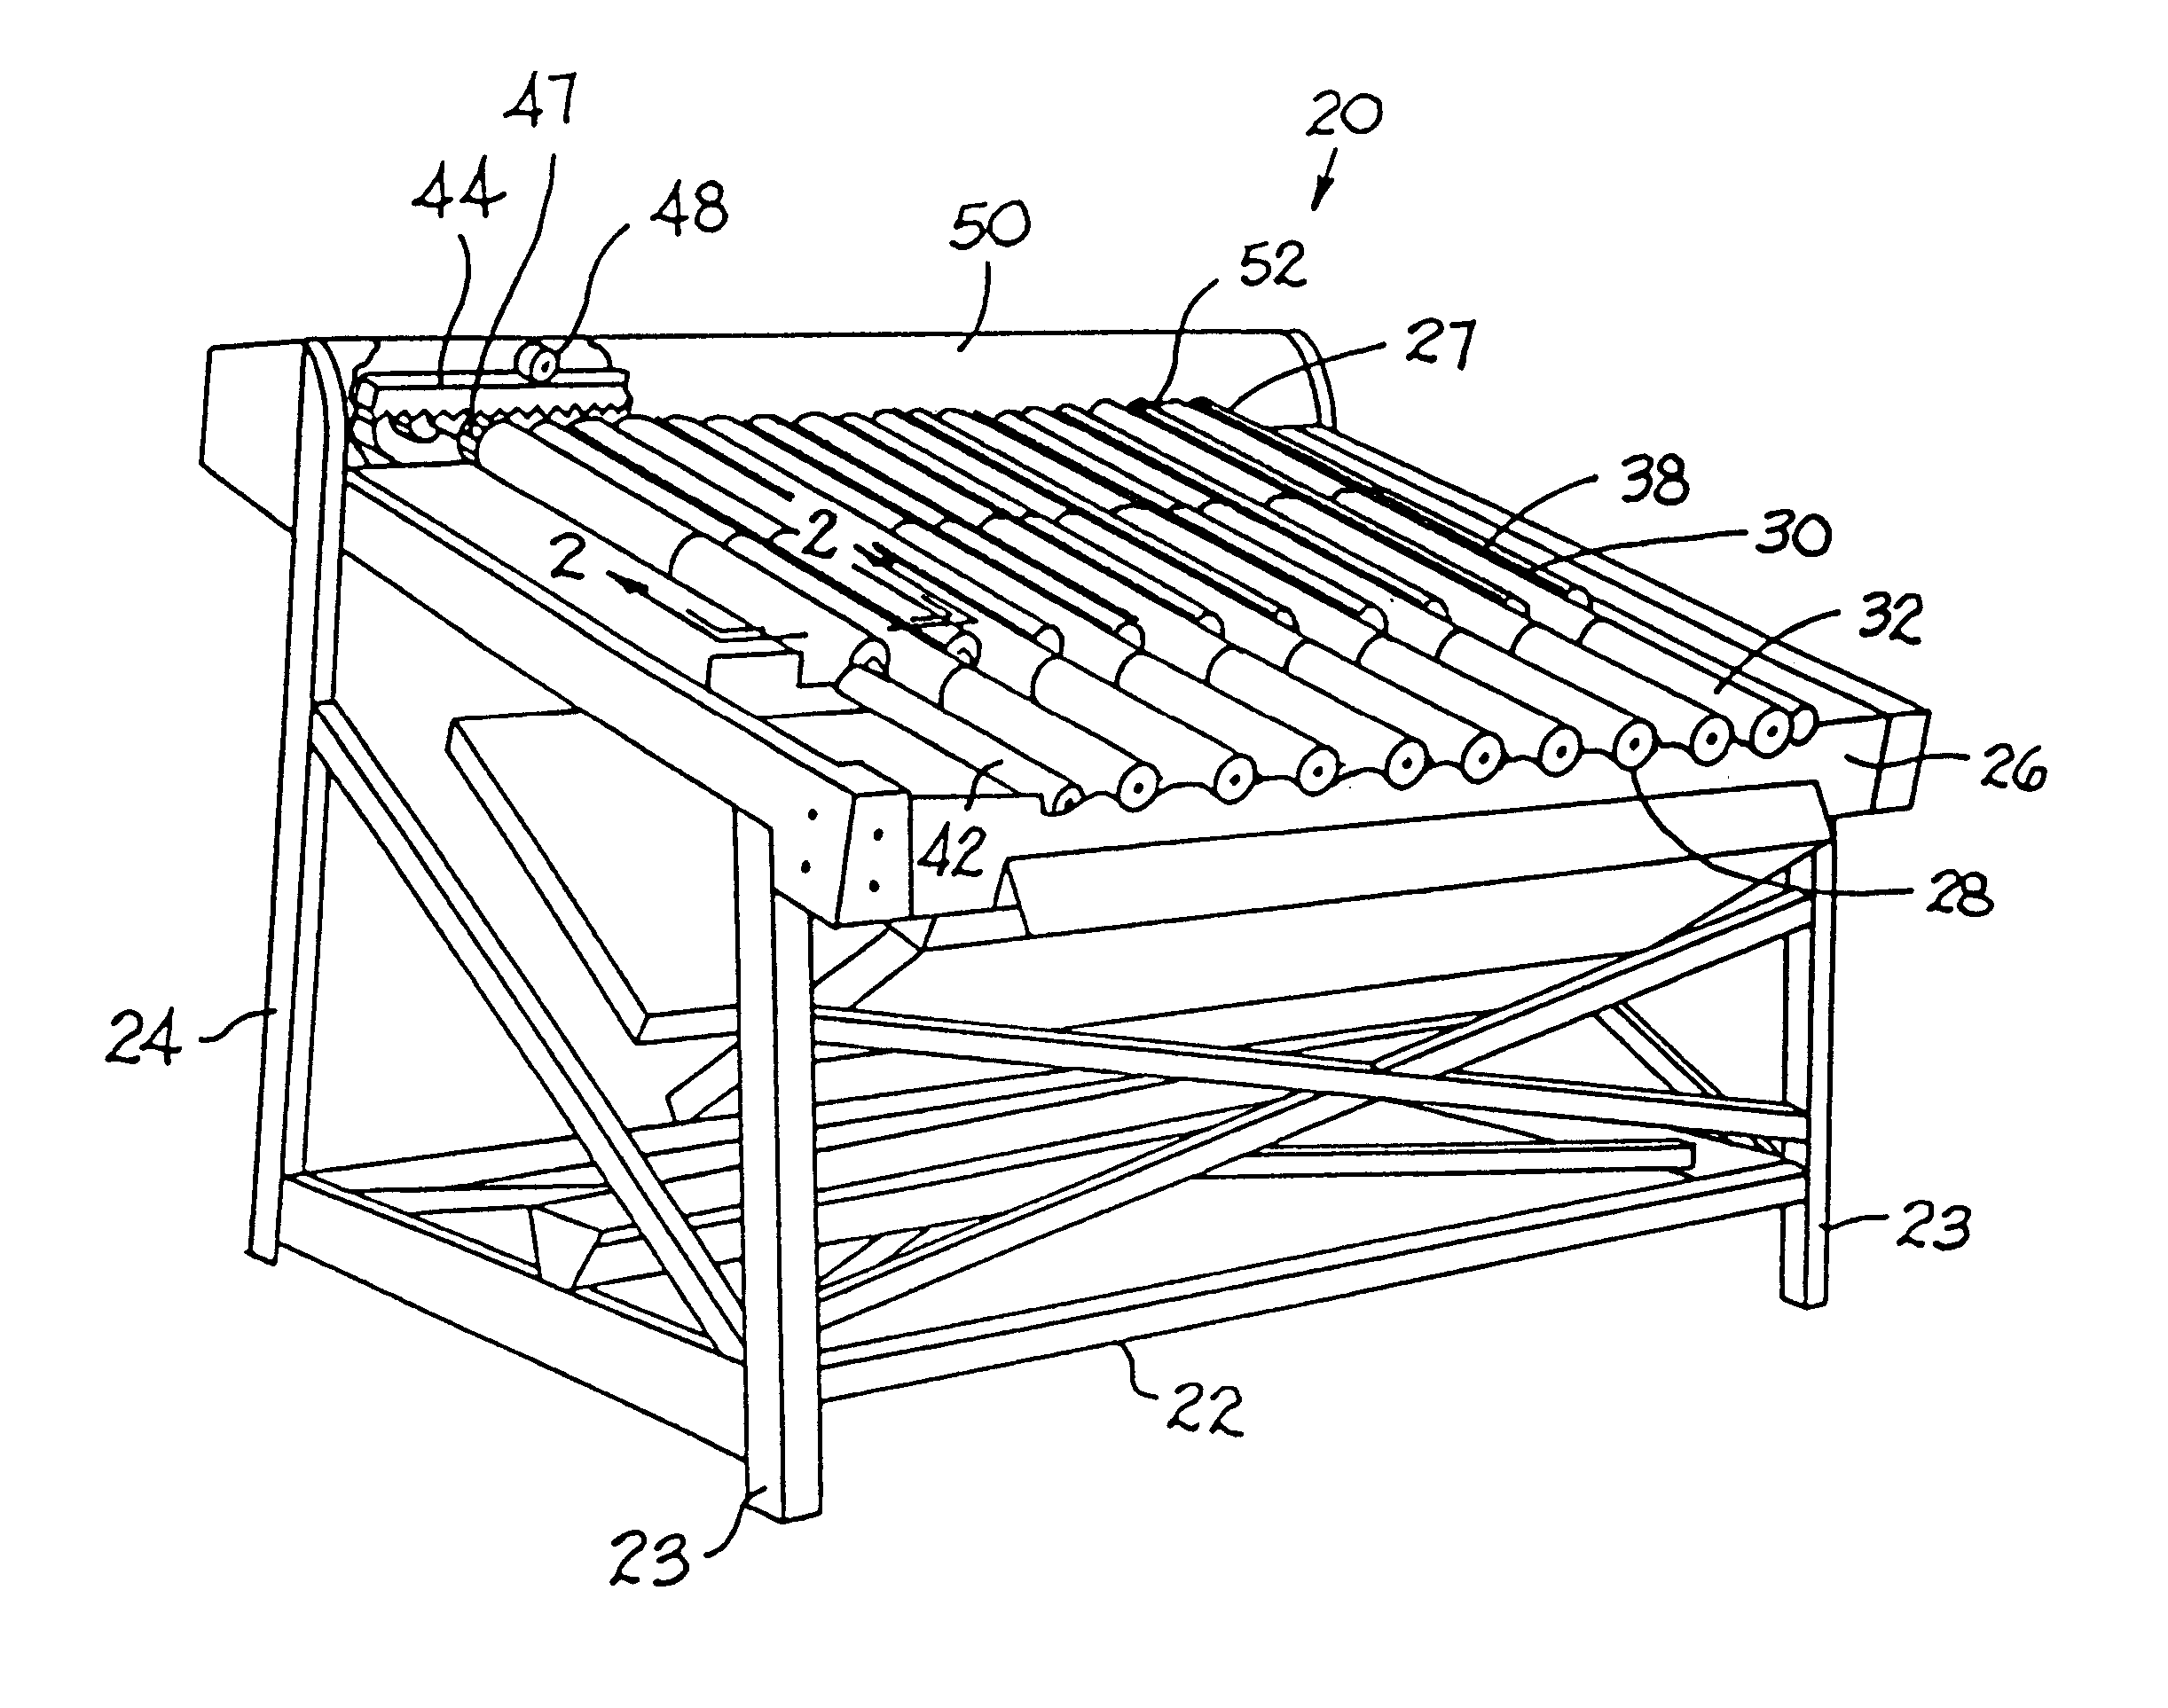 Peeling apparatus with segmented roller assemblies